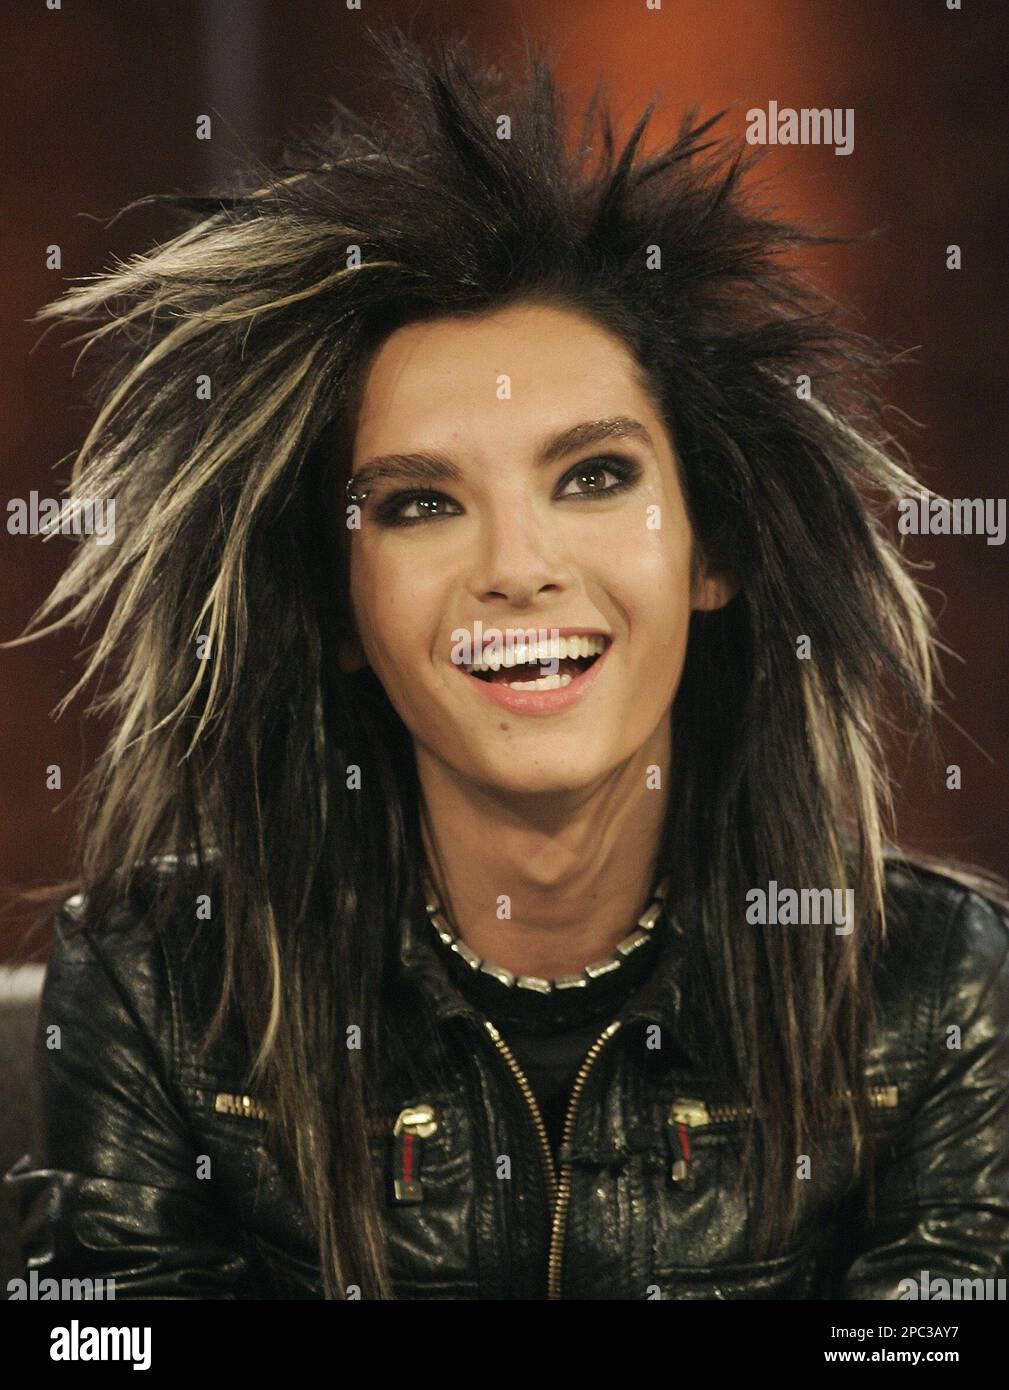 Lead singer of the German pop group 'Tokio Hotel' Bill Kaulitz smiles ...